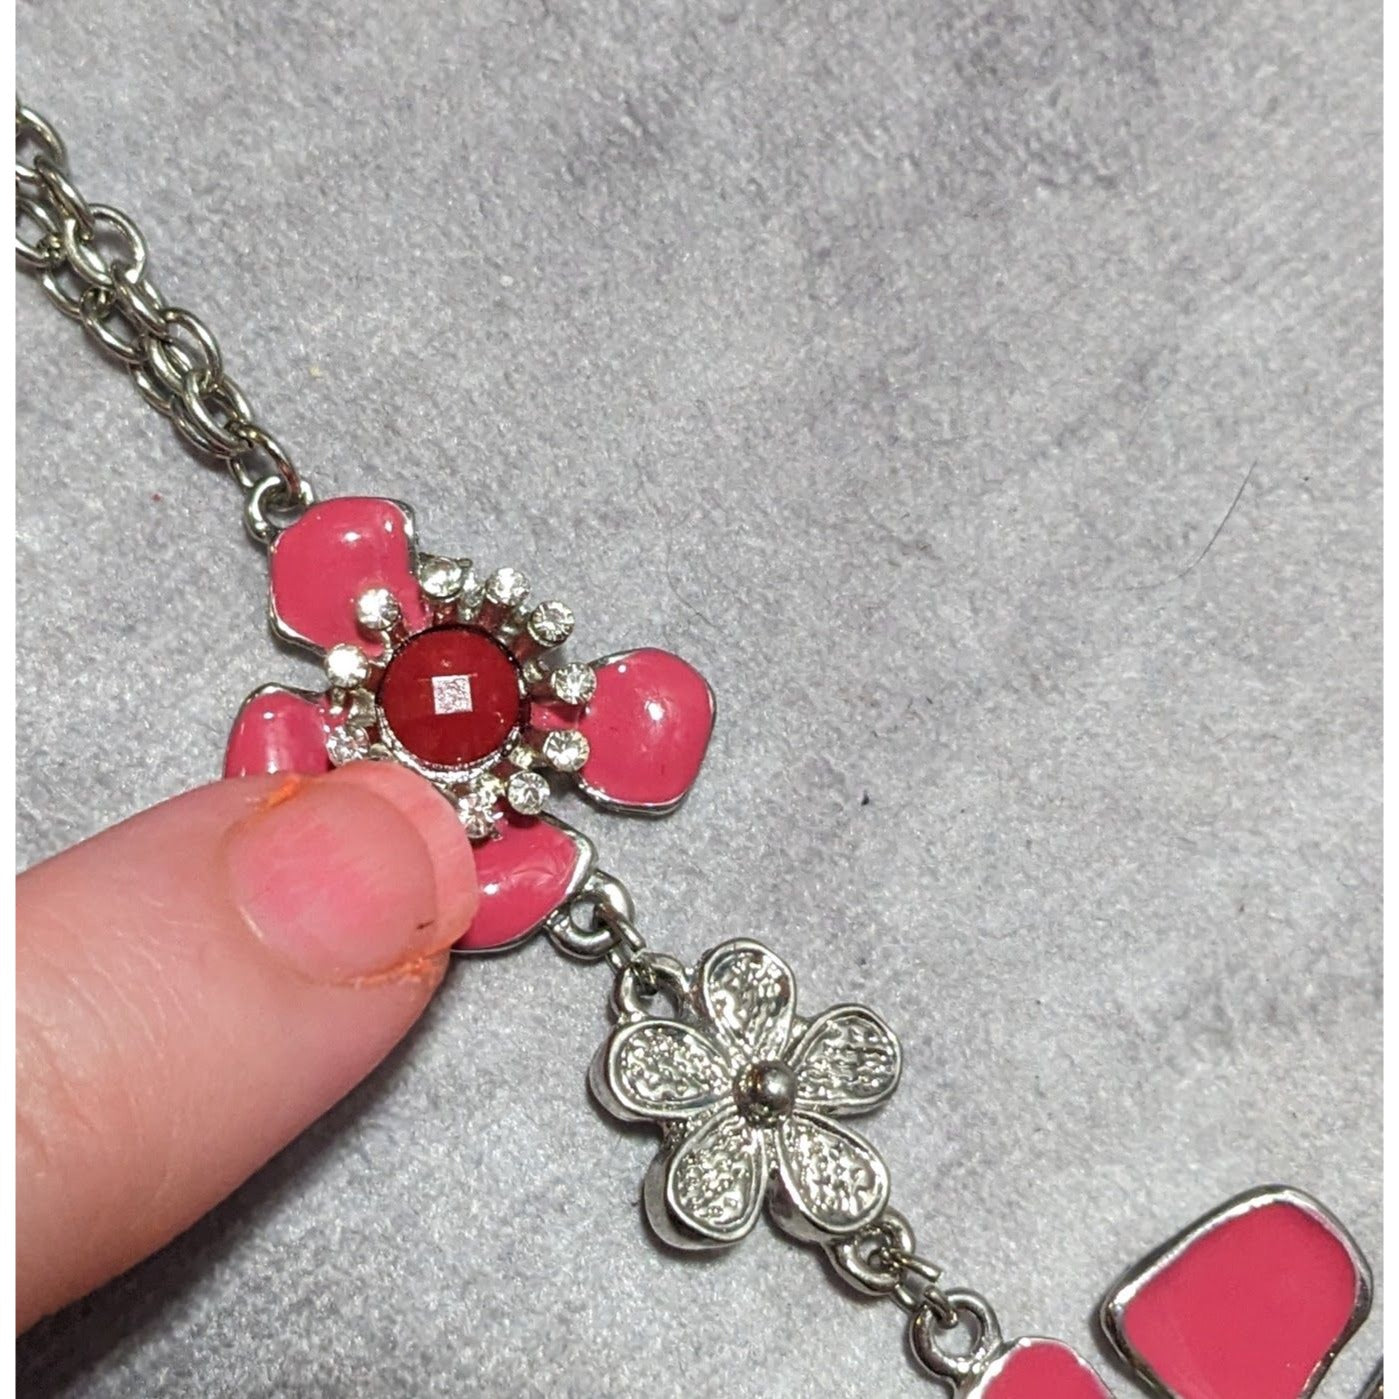 Retro Floral Chain Necklace